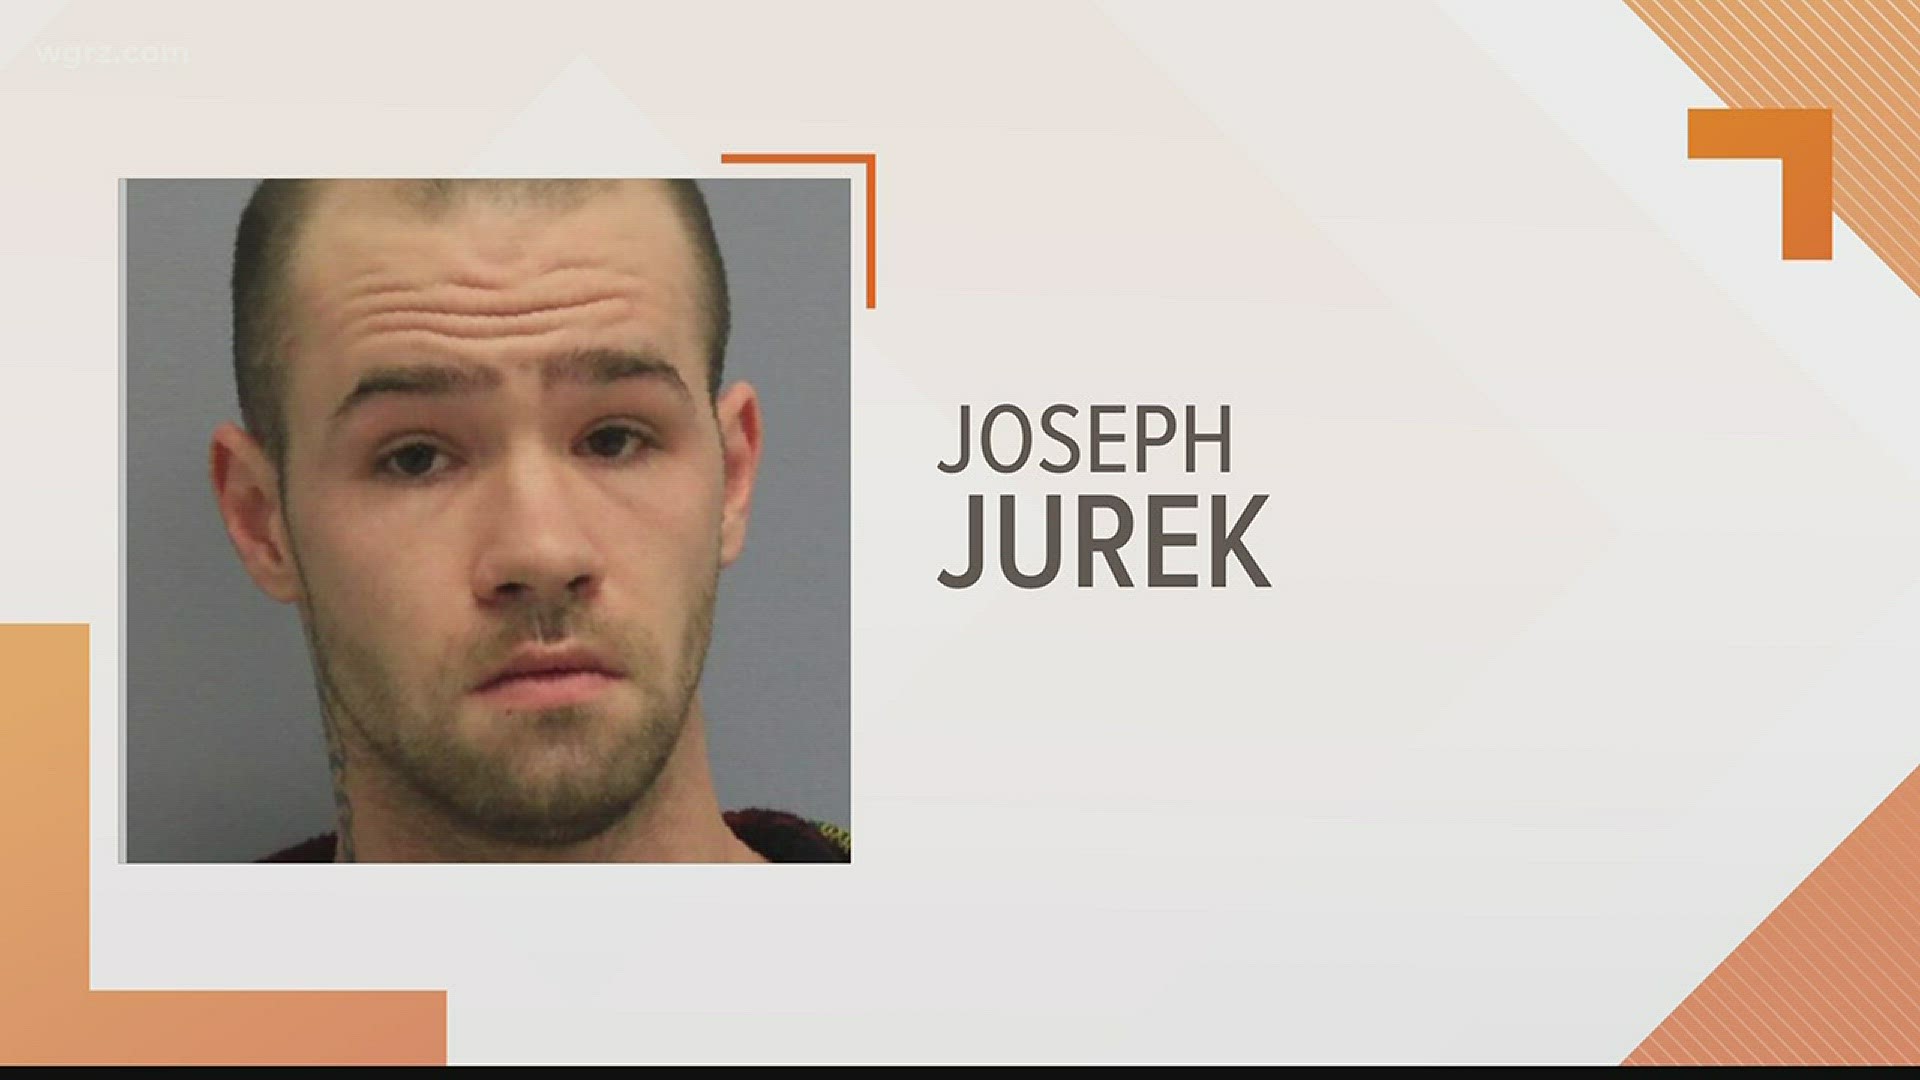 Joseph Jurek of Alden has been arrested for allegedly shaking his 4-month-old child.